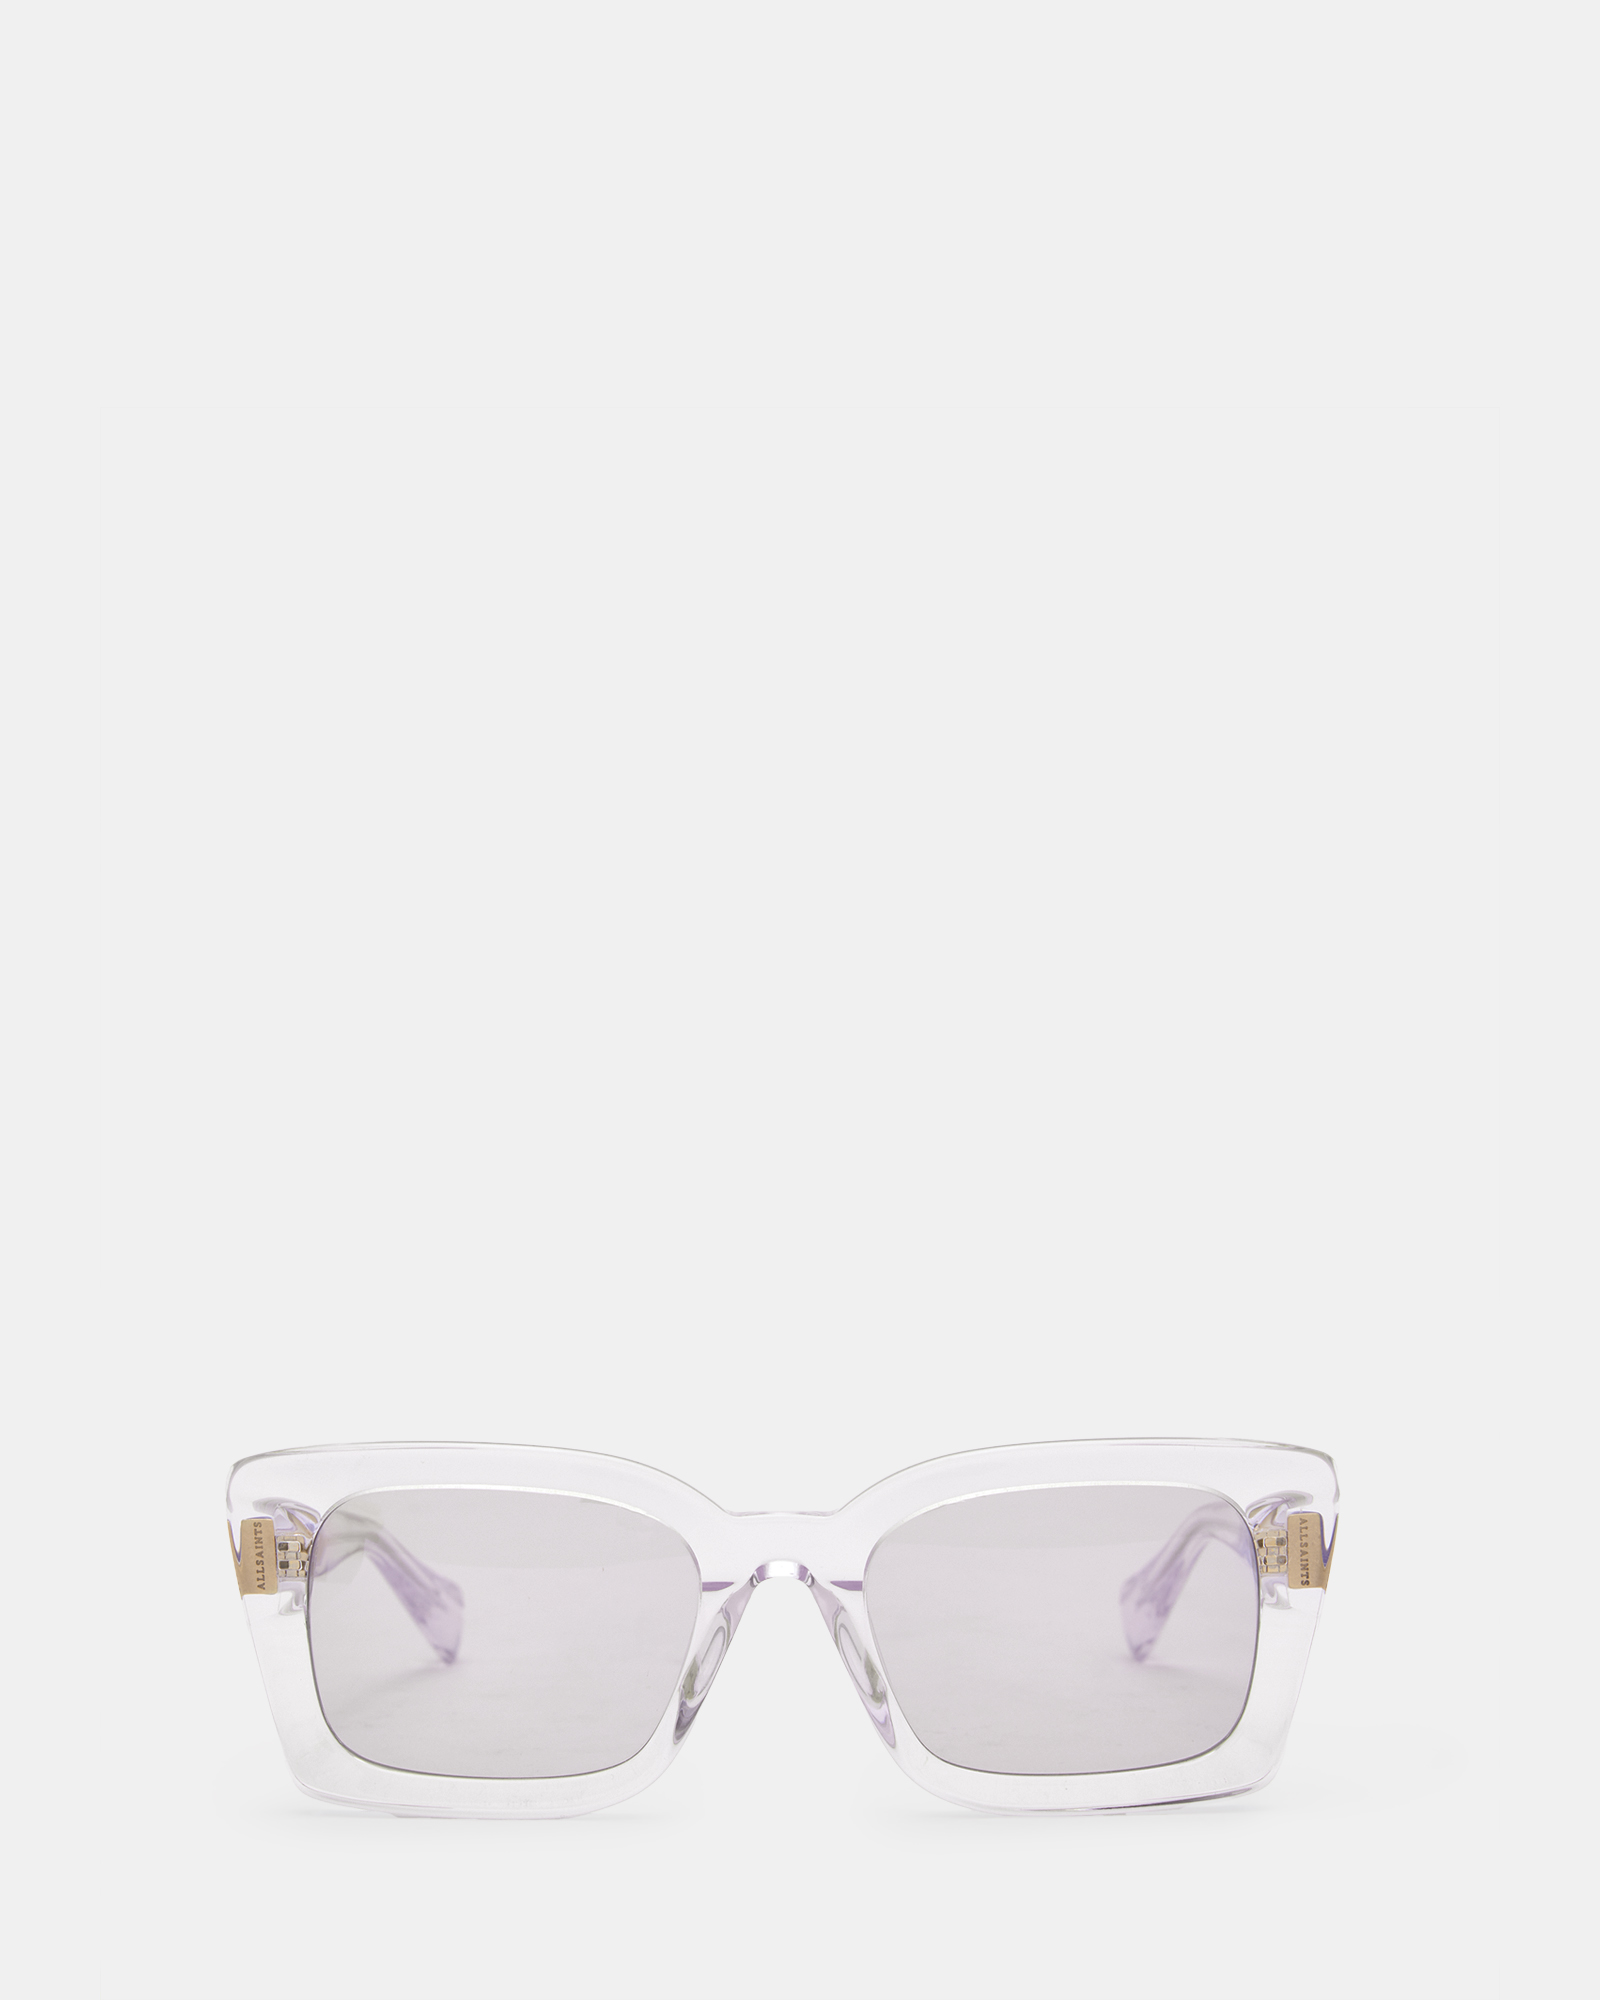 AllSaints Marla Square Bevelled Sunglasses